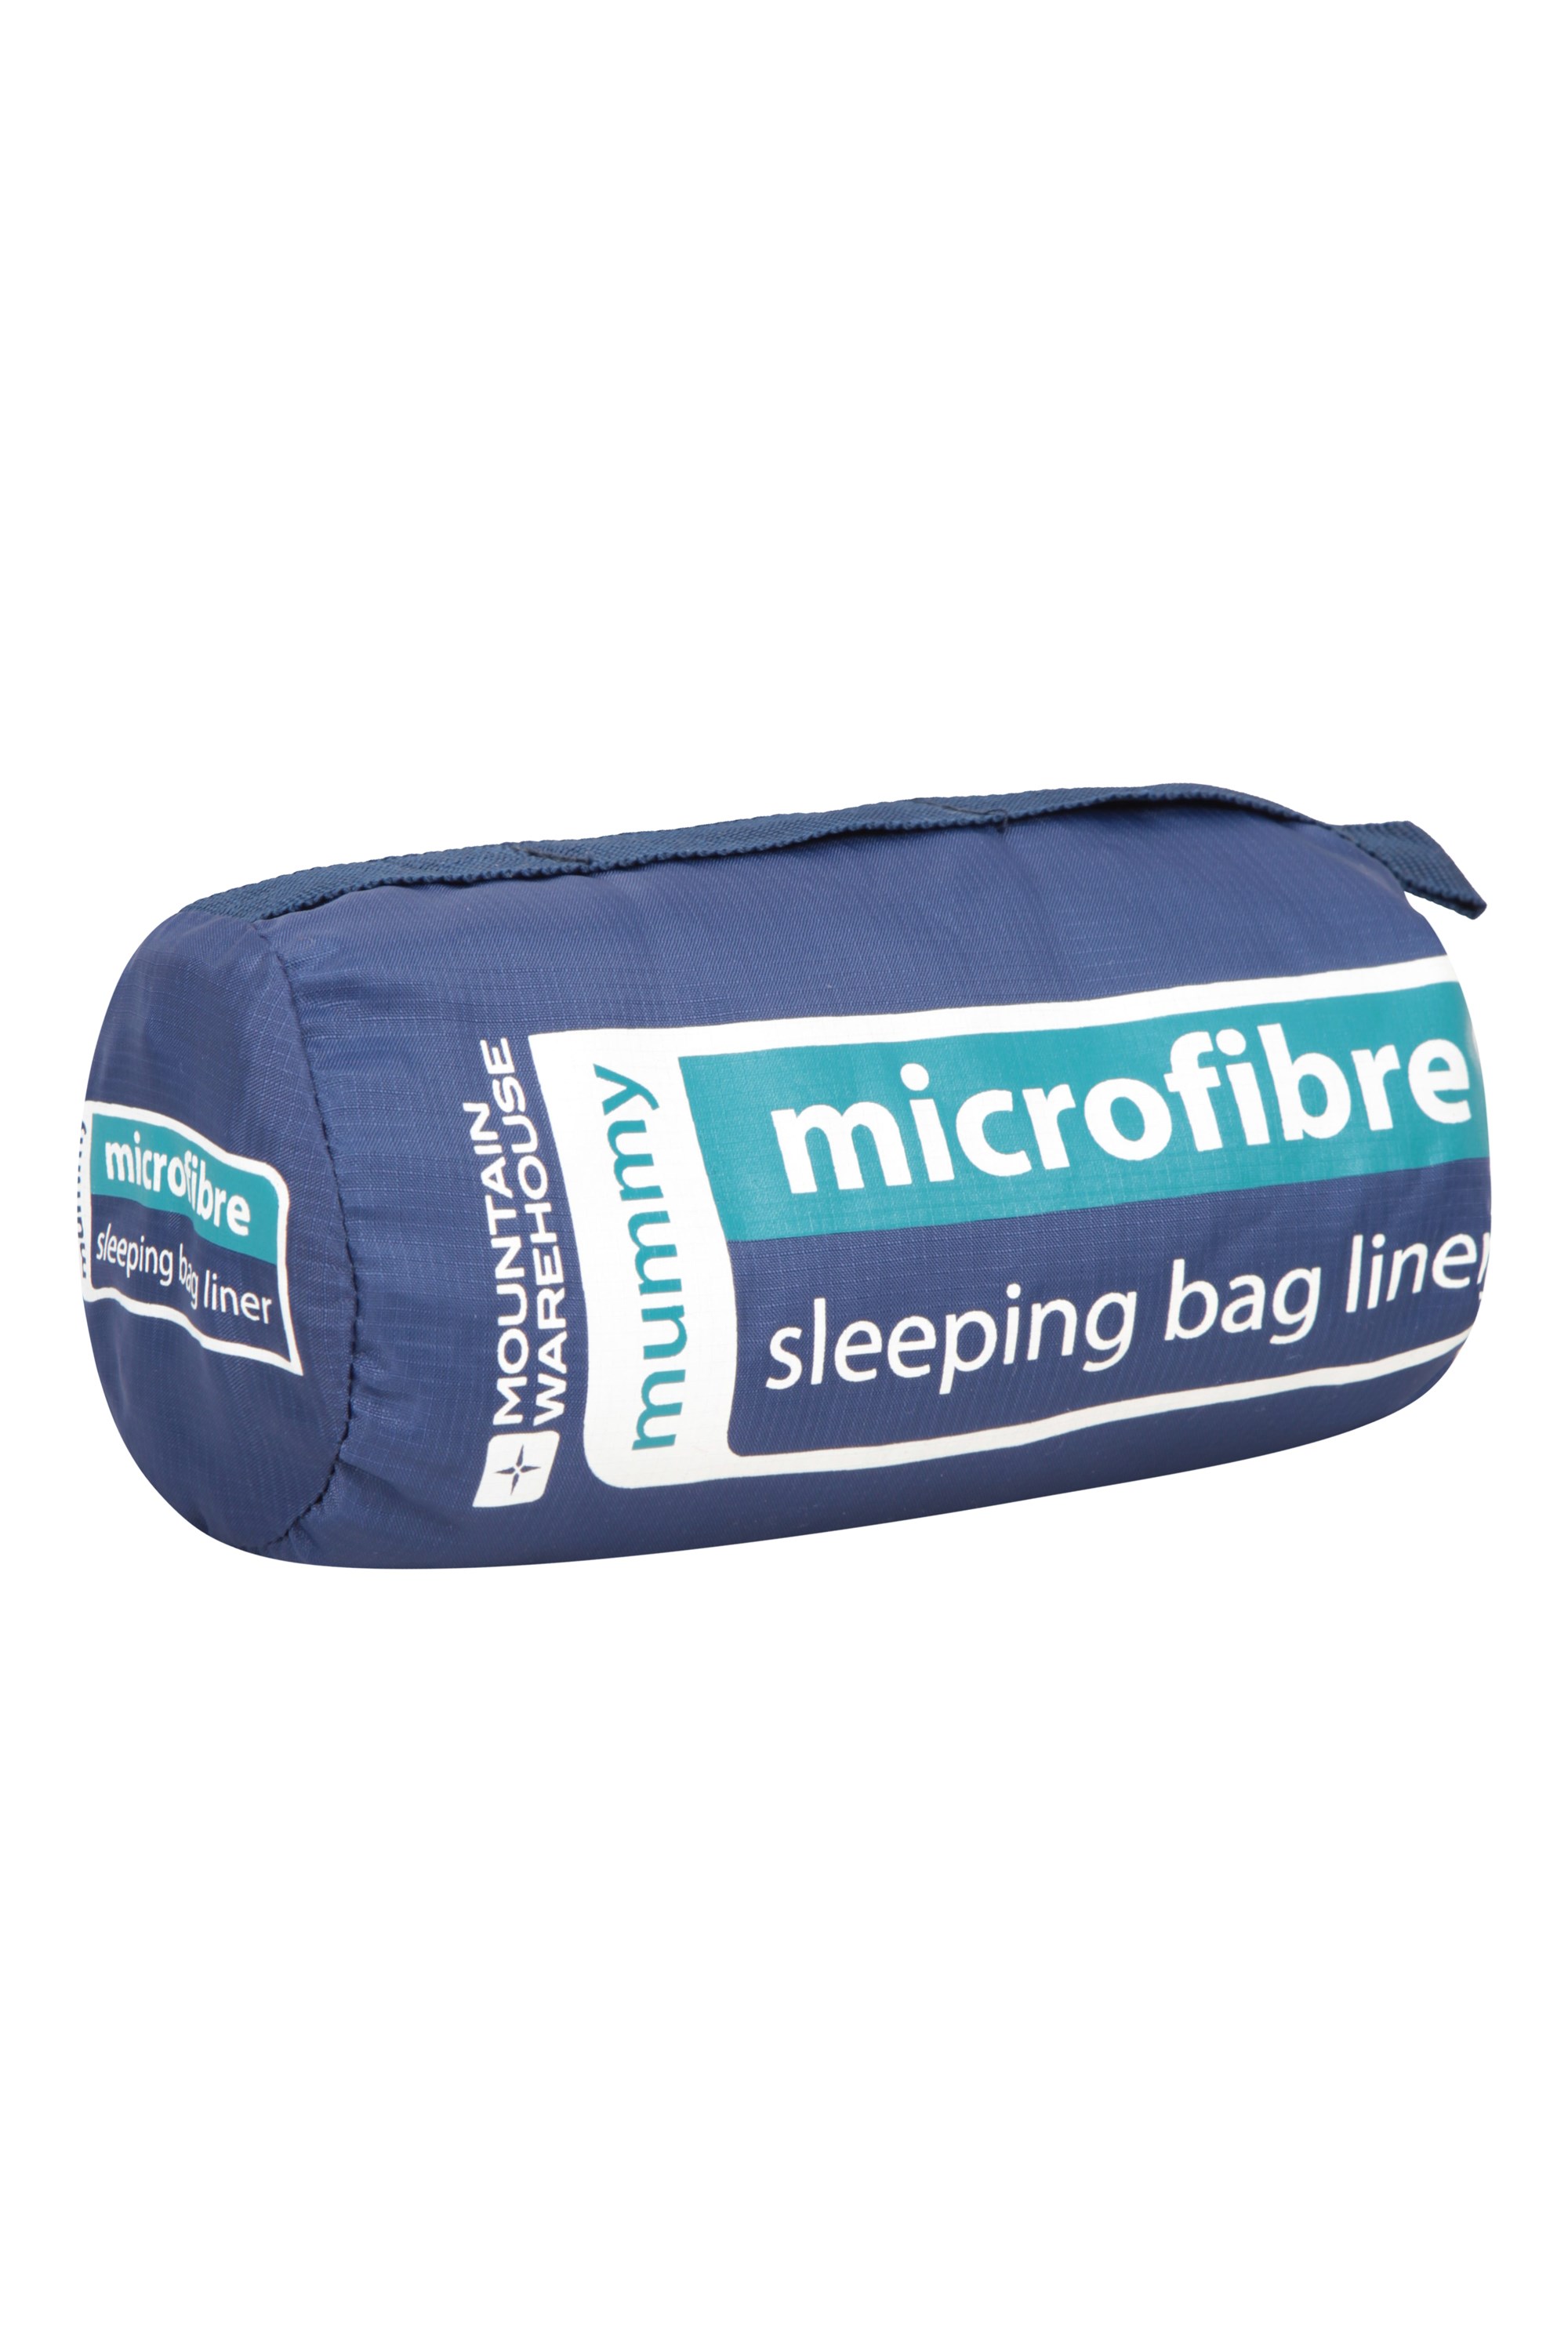 Mountain Warehouse Microfiber Mummy Sleeping Bag Liner Lightweight Soft Warm 